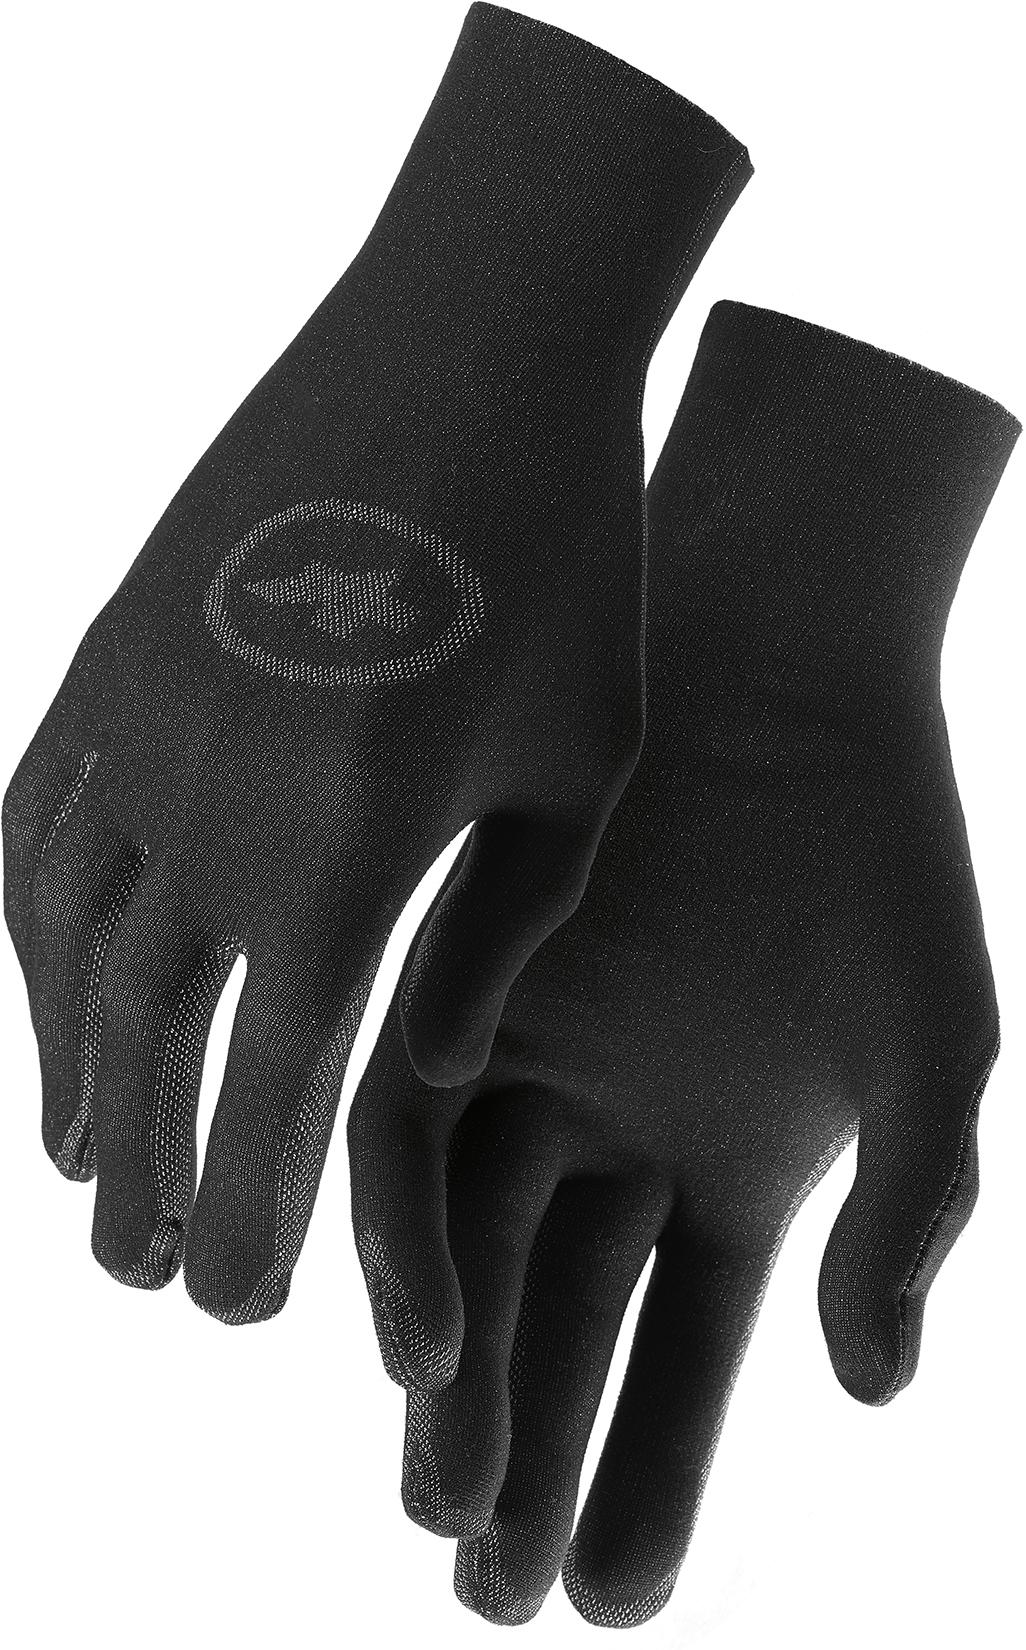 Assos Assosoires Spring Fall Liner Gloves  Black Series